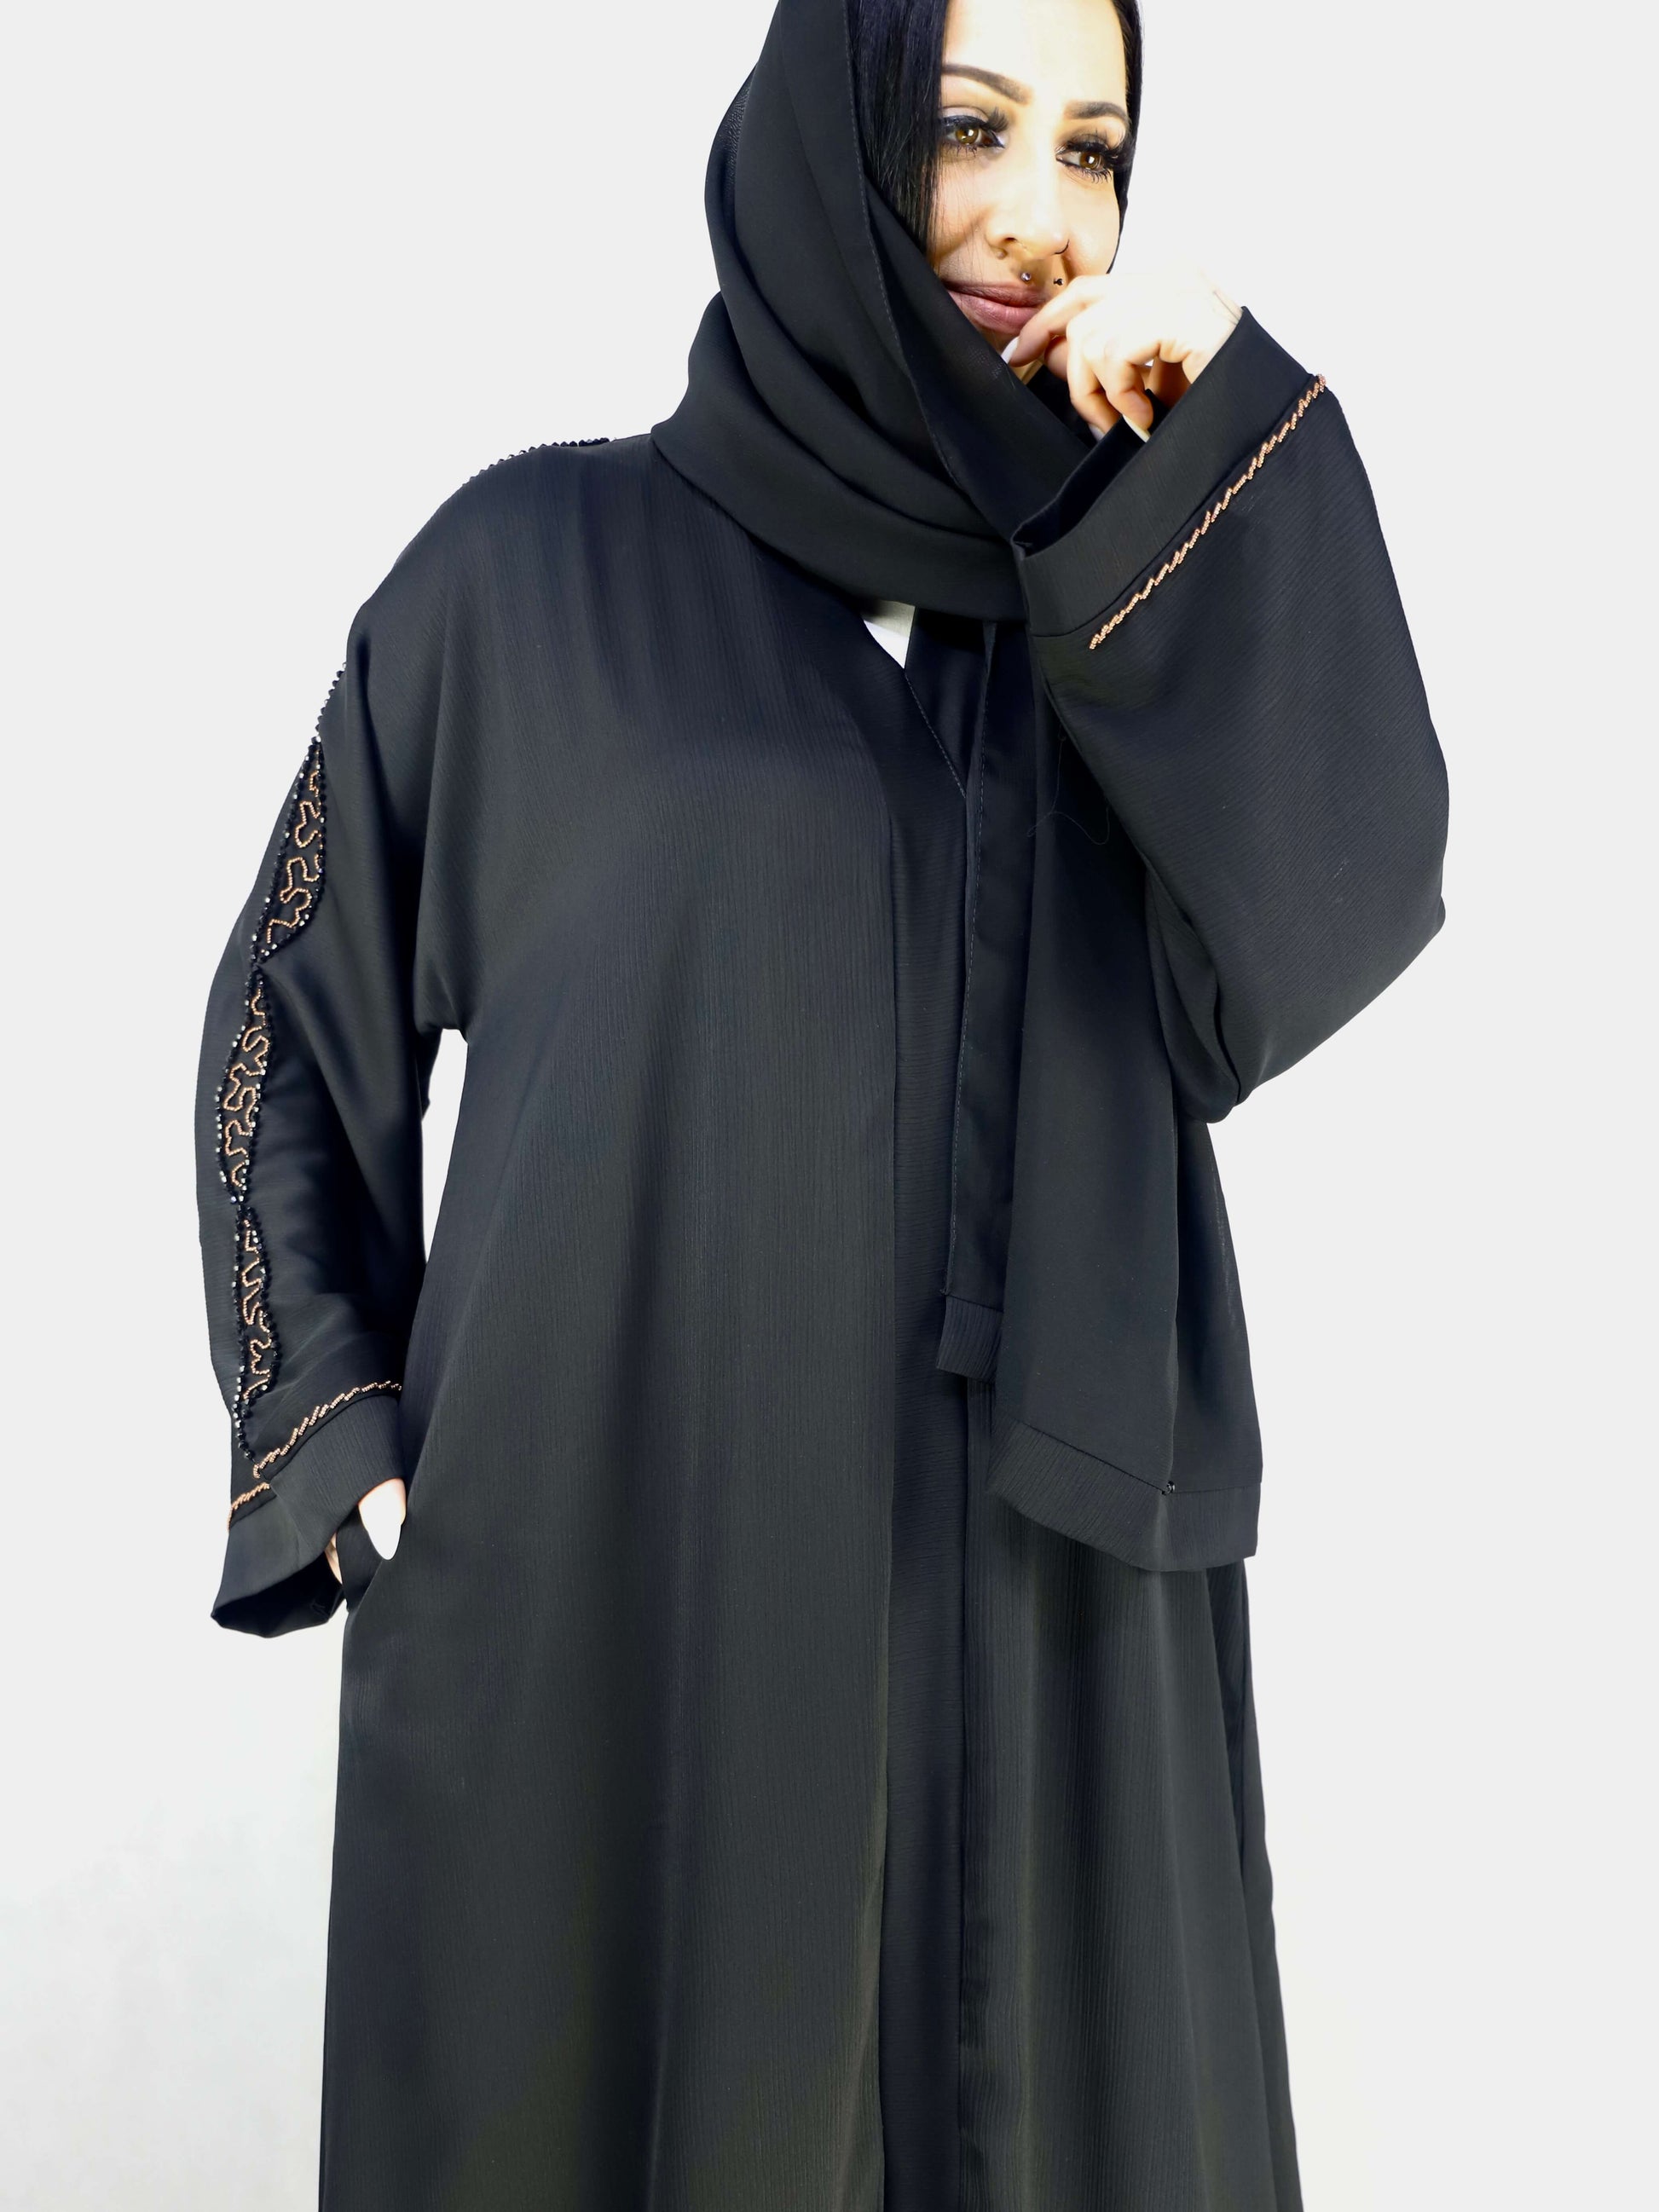 Hand Stone Work Black Color Abaya Modest Dresses For Women.